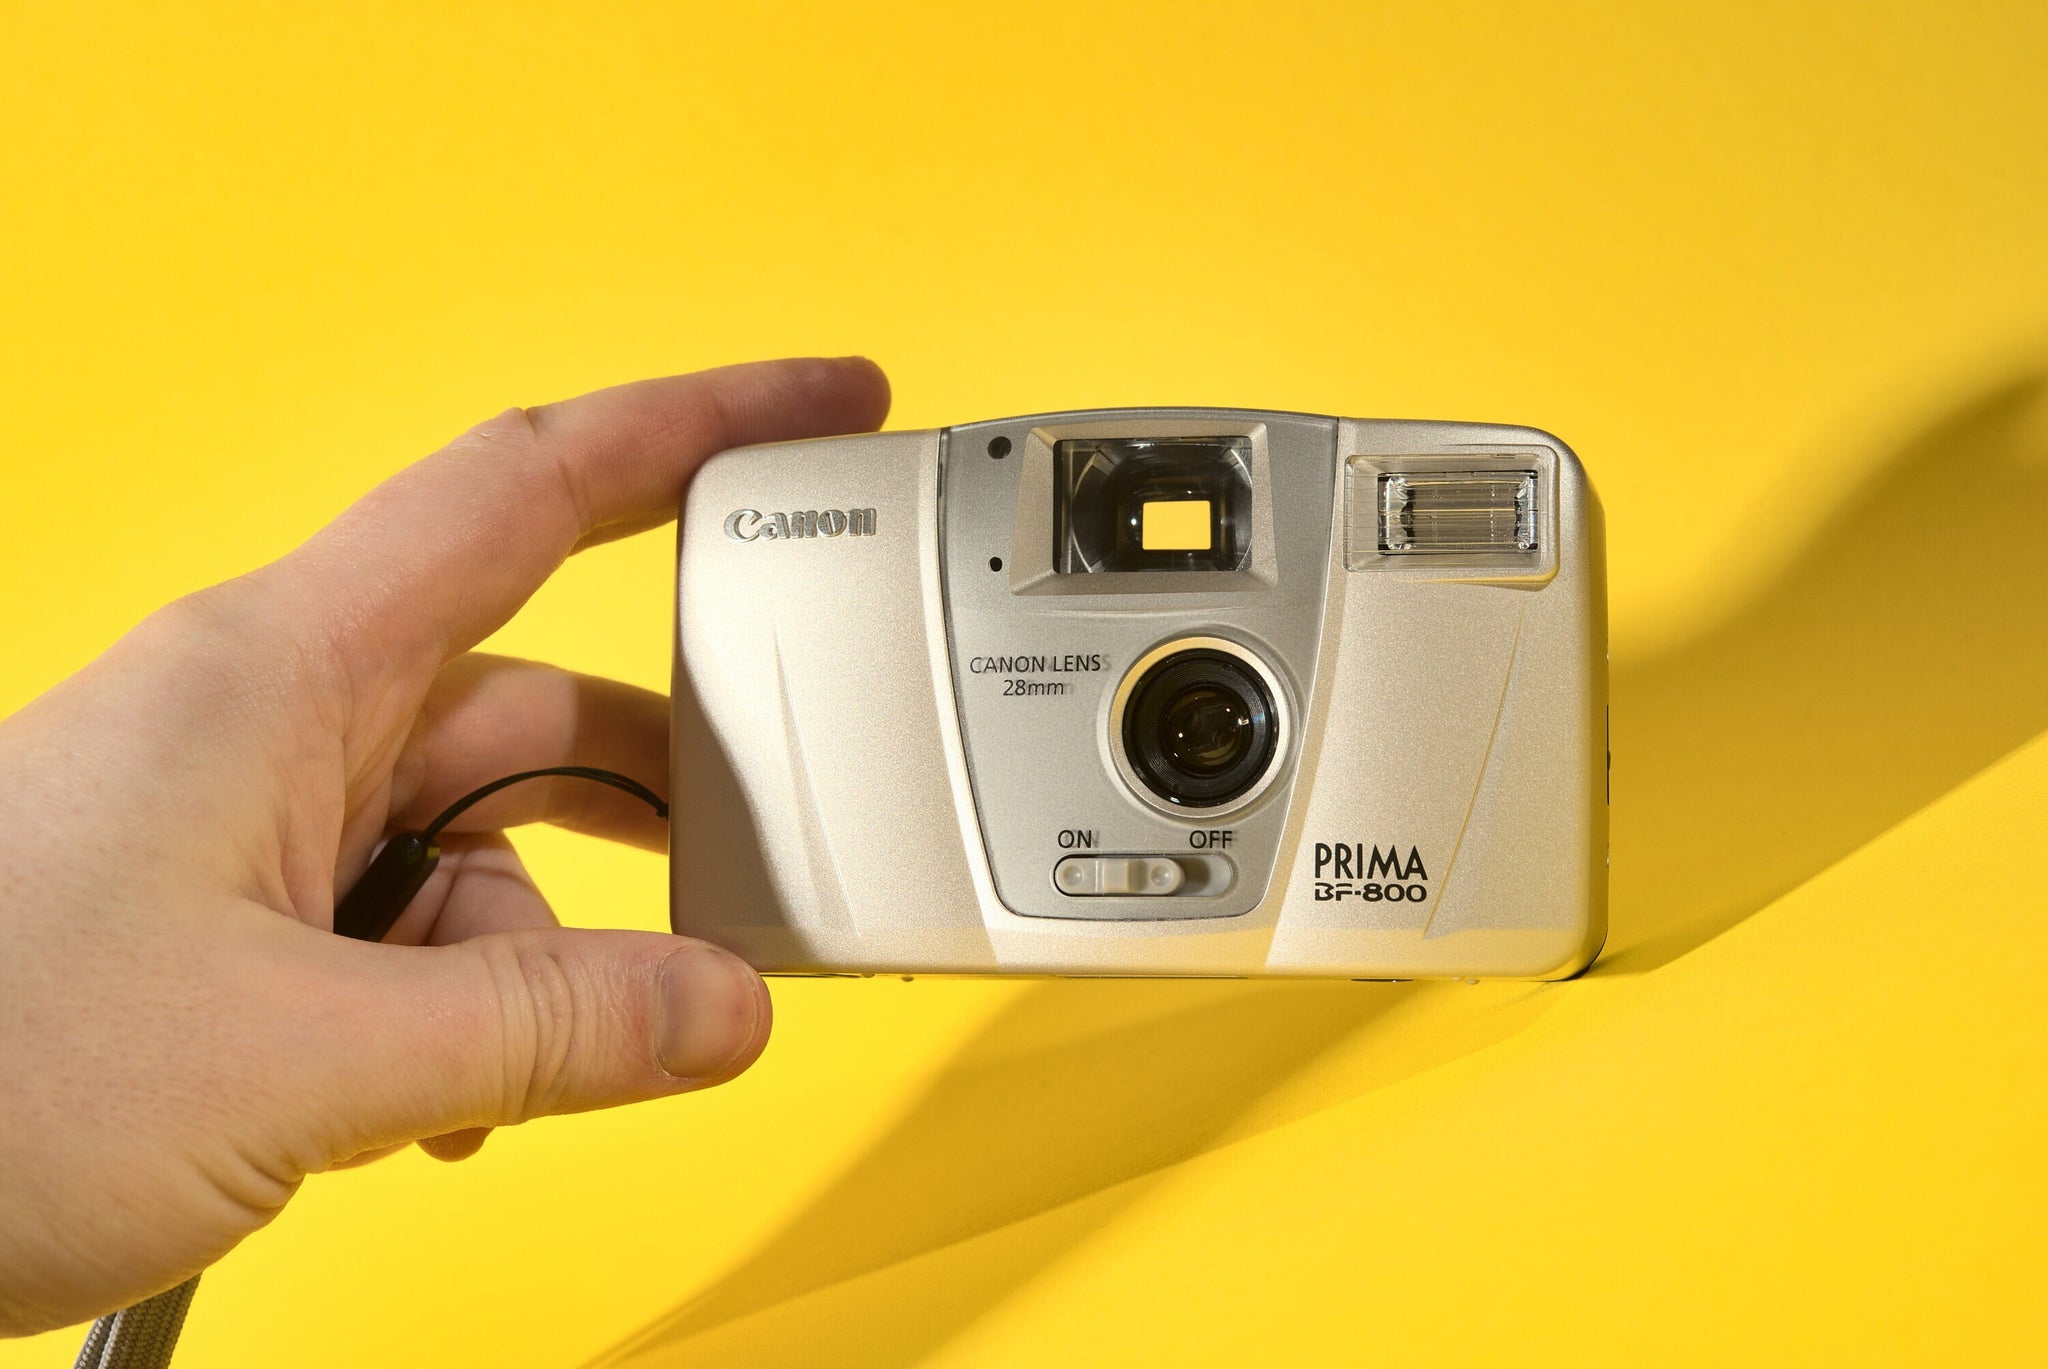 NEW !! Canon PRIMA BF-800, Working Film Camera, Vintage Camera - Vintage Polaroid Instant Cameras